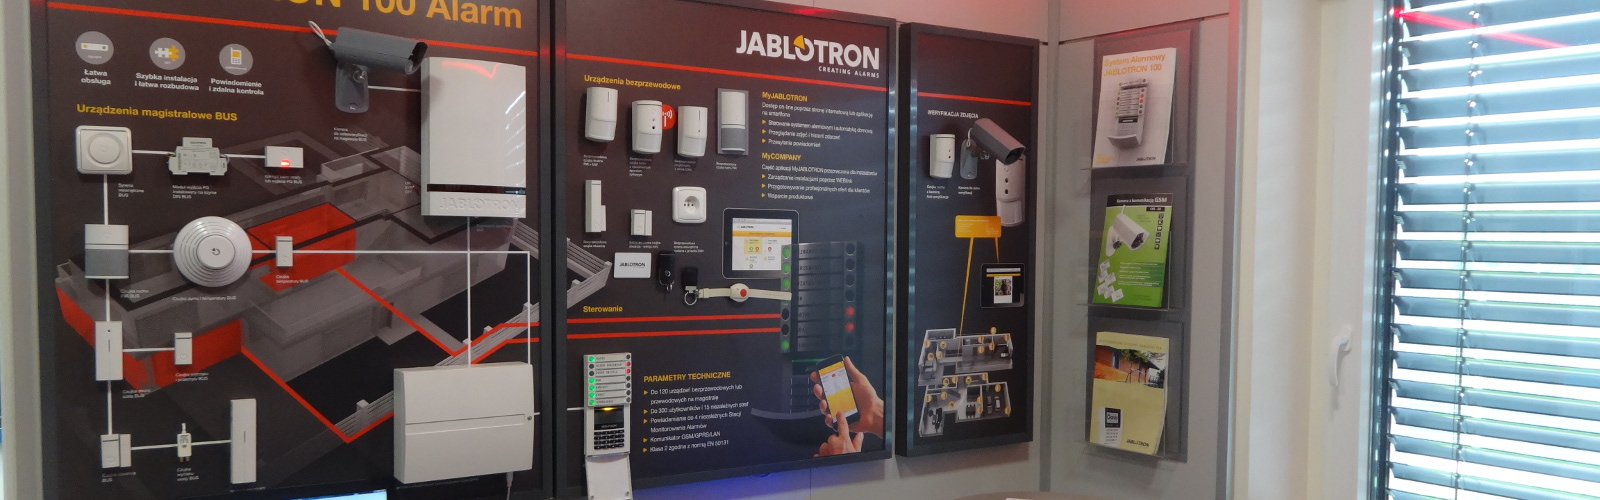 Jablotron Showroom 1